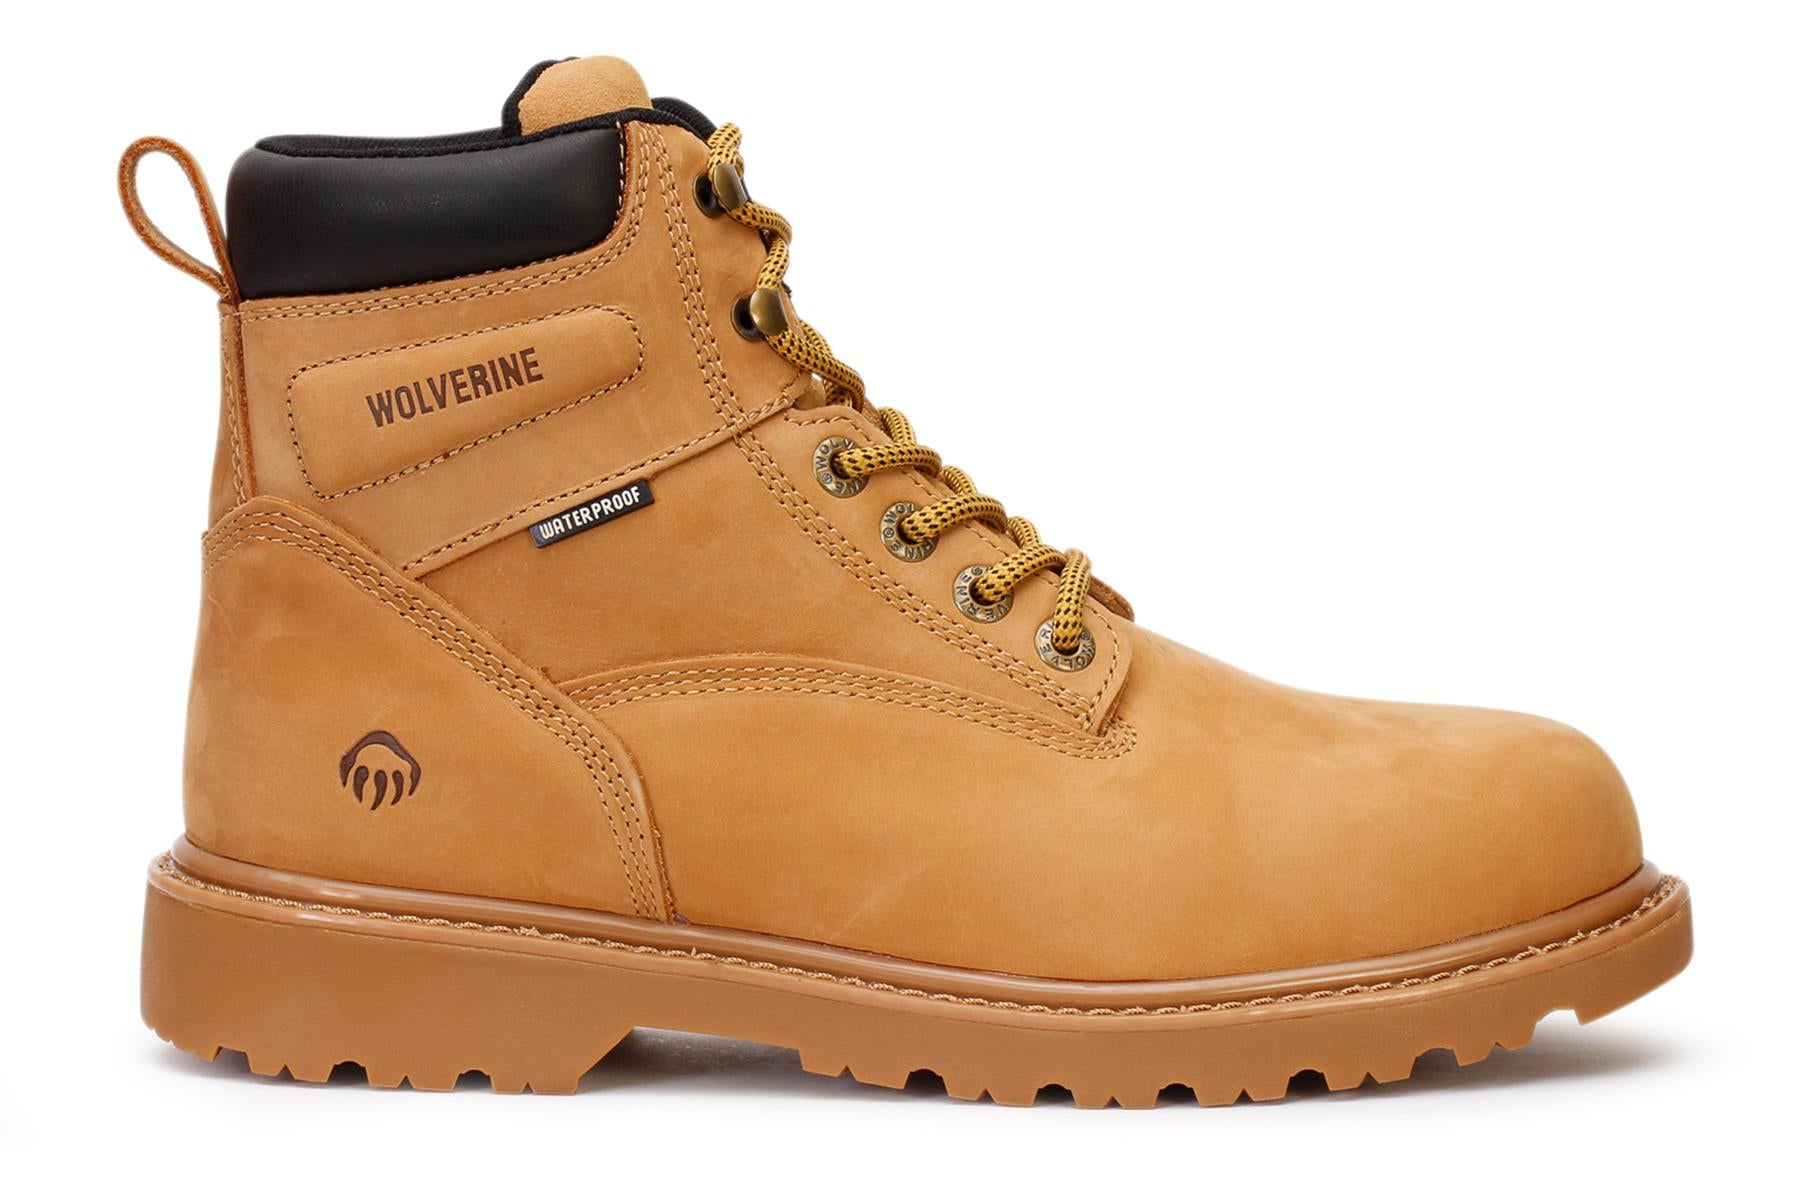 wolverine-mens-6-work-steel-toe-waterproof-boots-floorhand-wheat-w10632-main